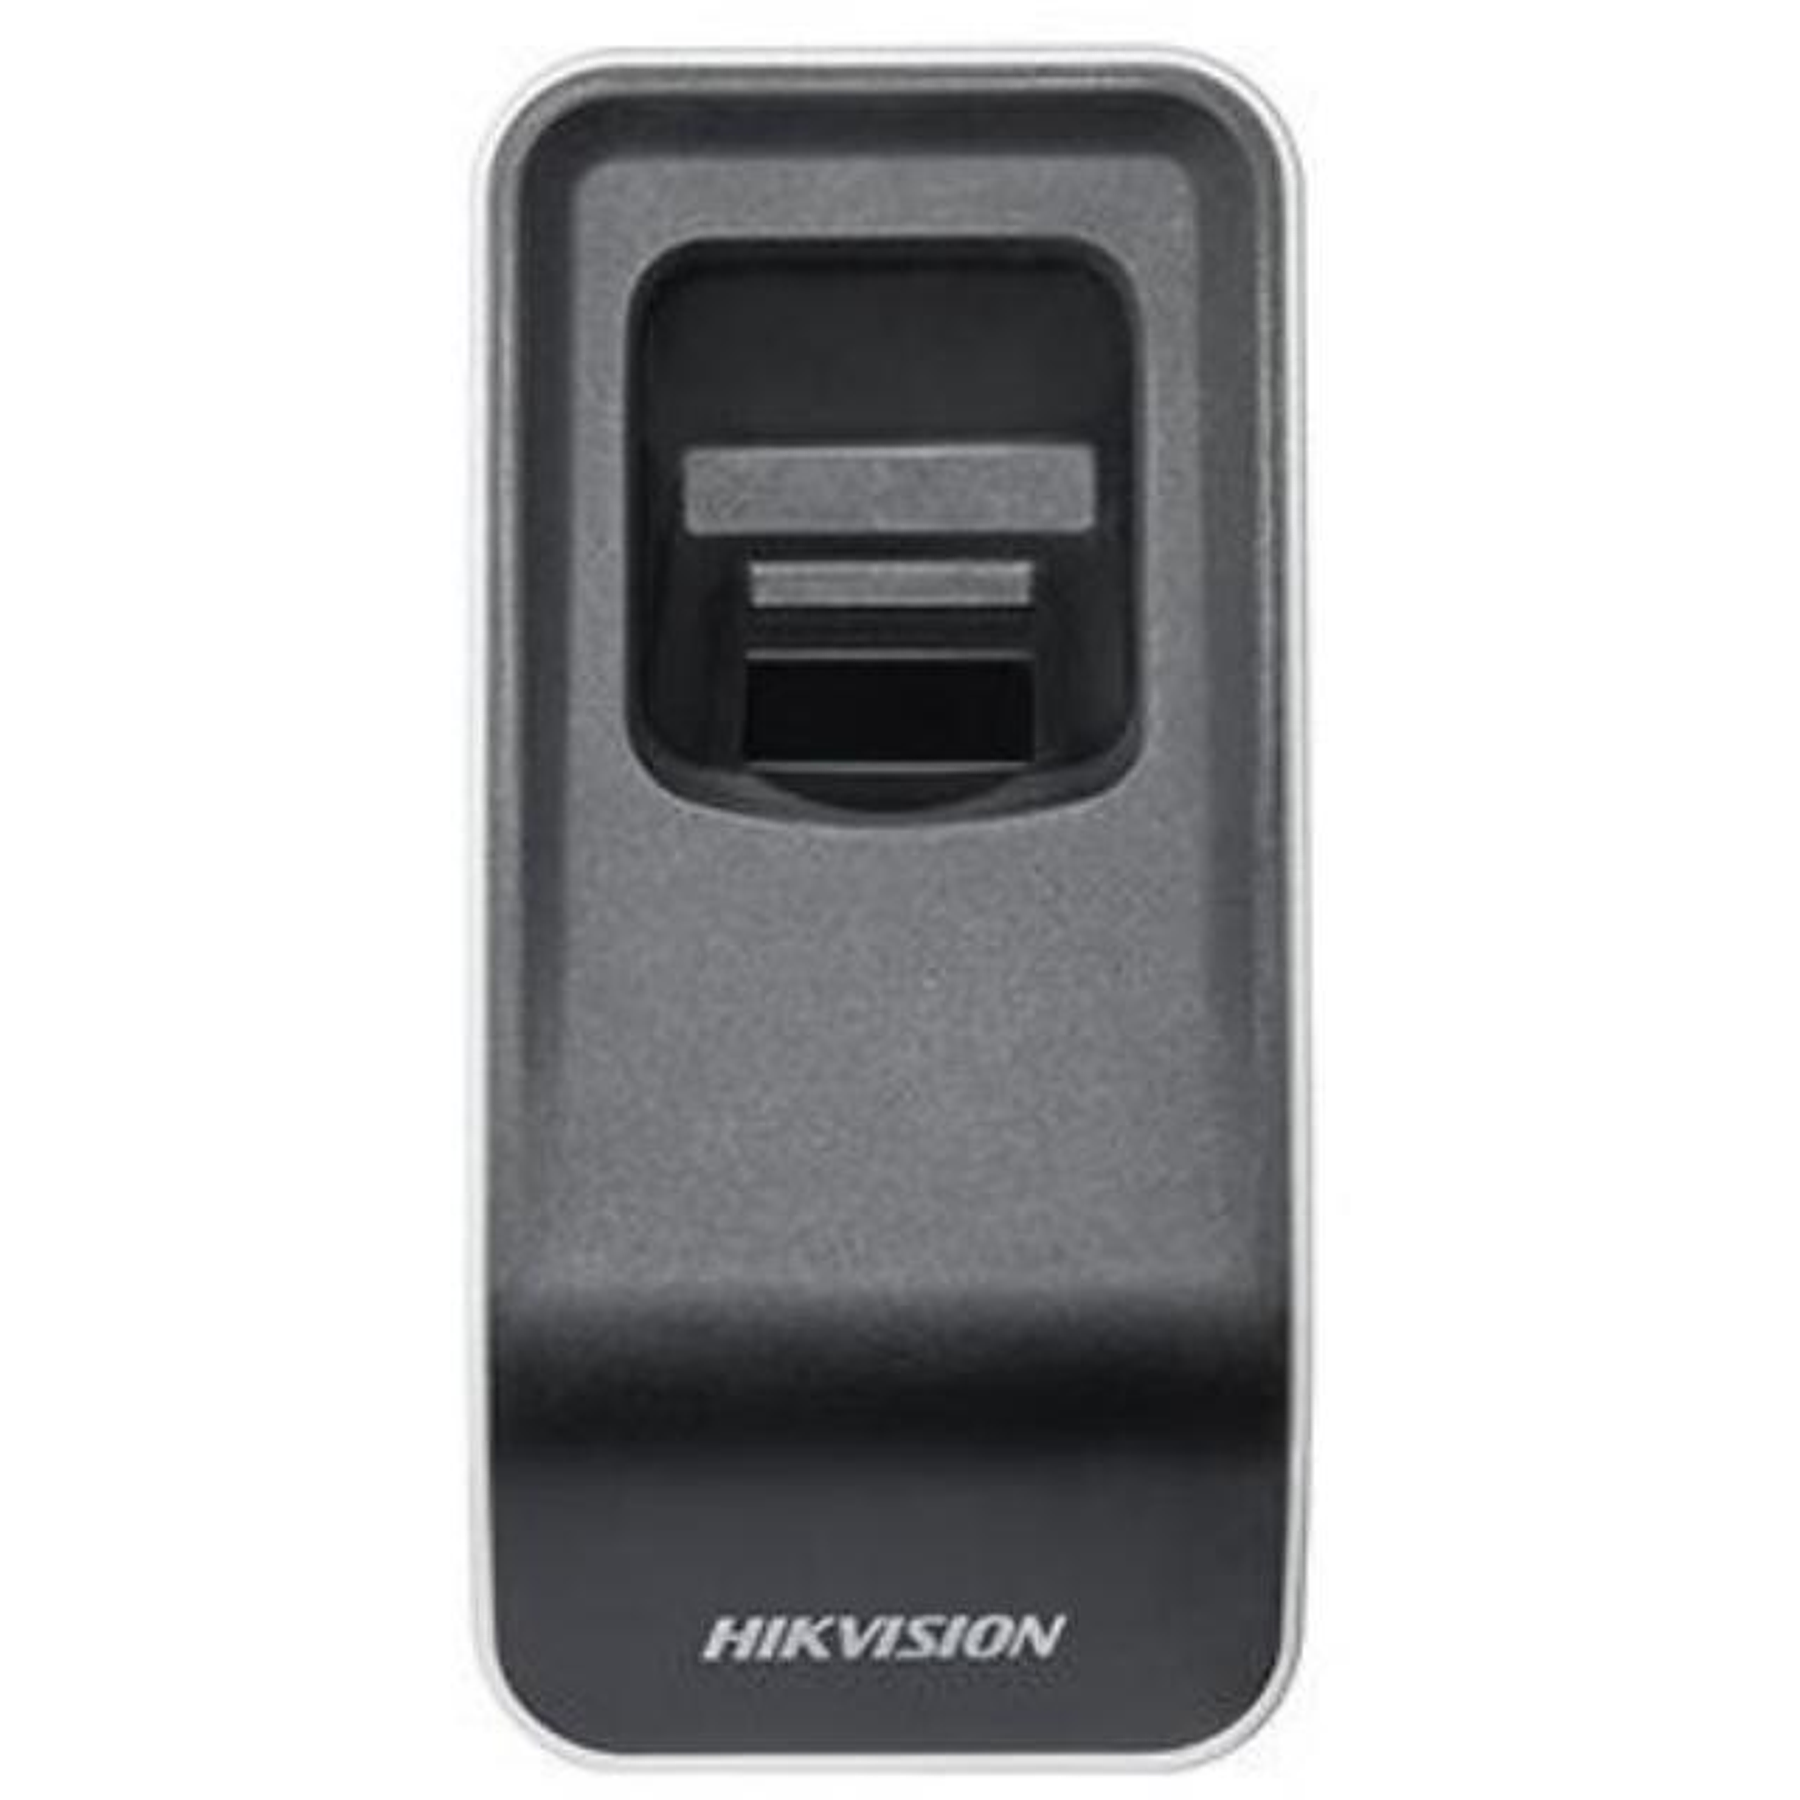 Hikvision DS-K1F820-F Registrador de Huellas Dactilares